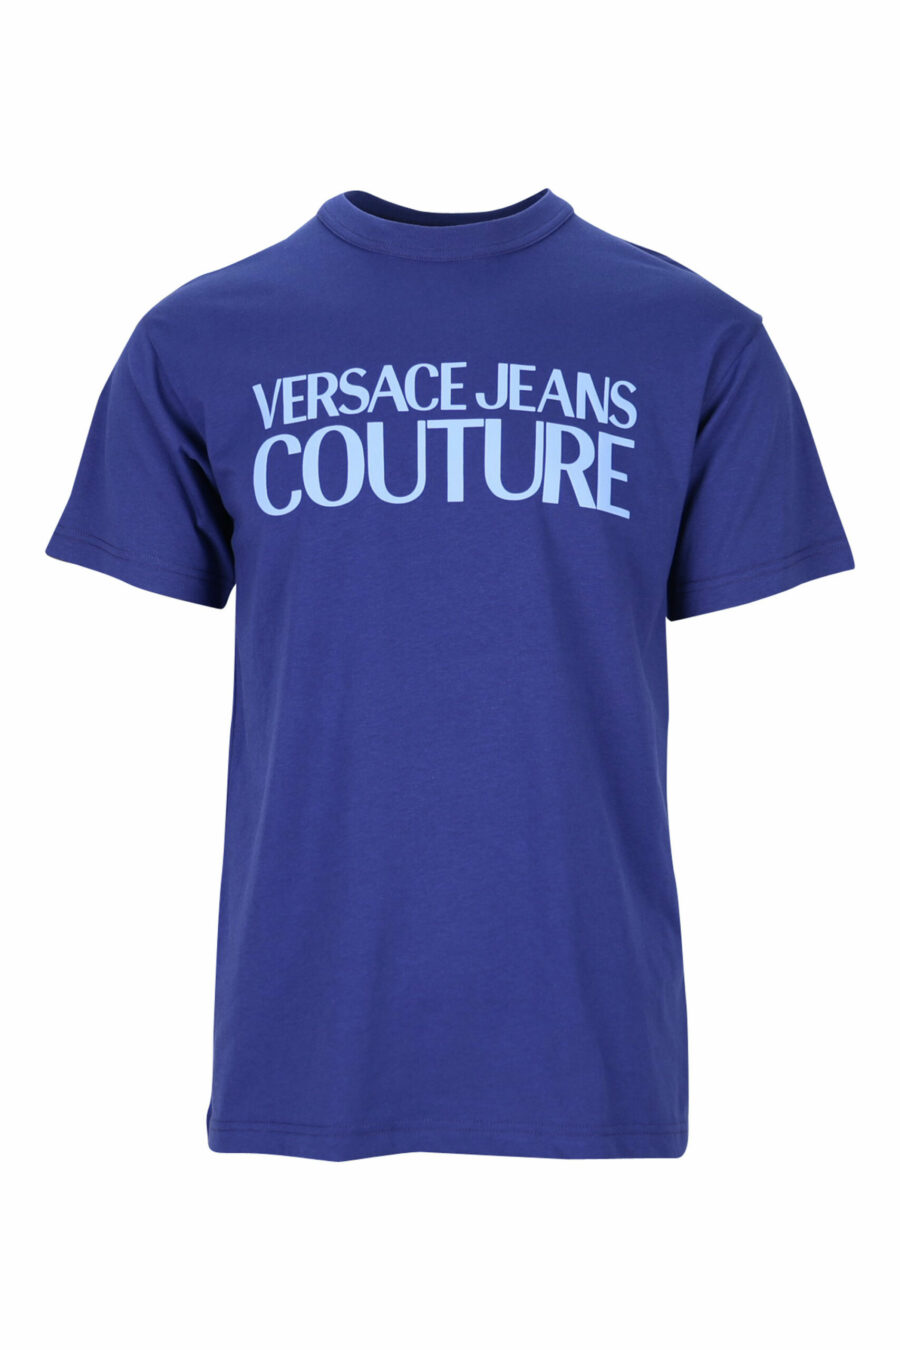 T-shirt bleu marine avec logo bleu classique - 8052019468175